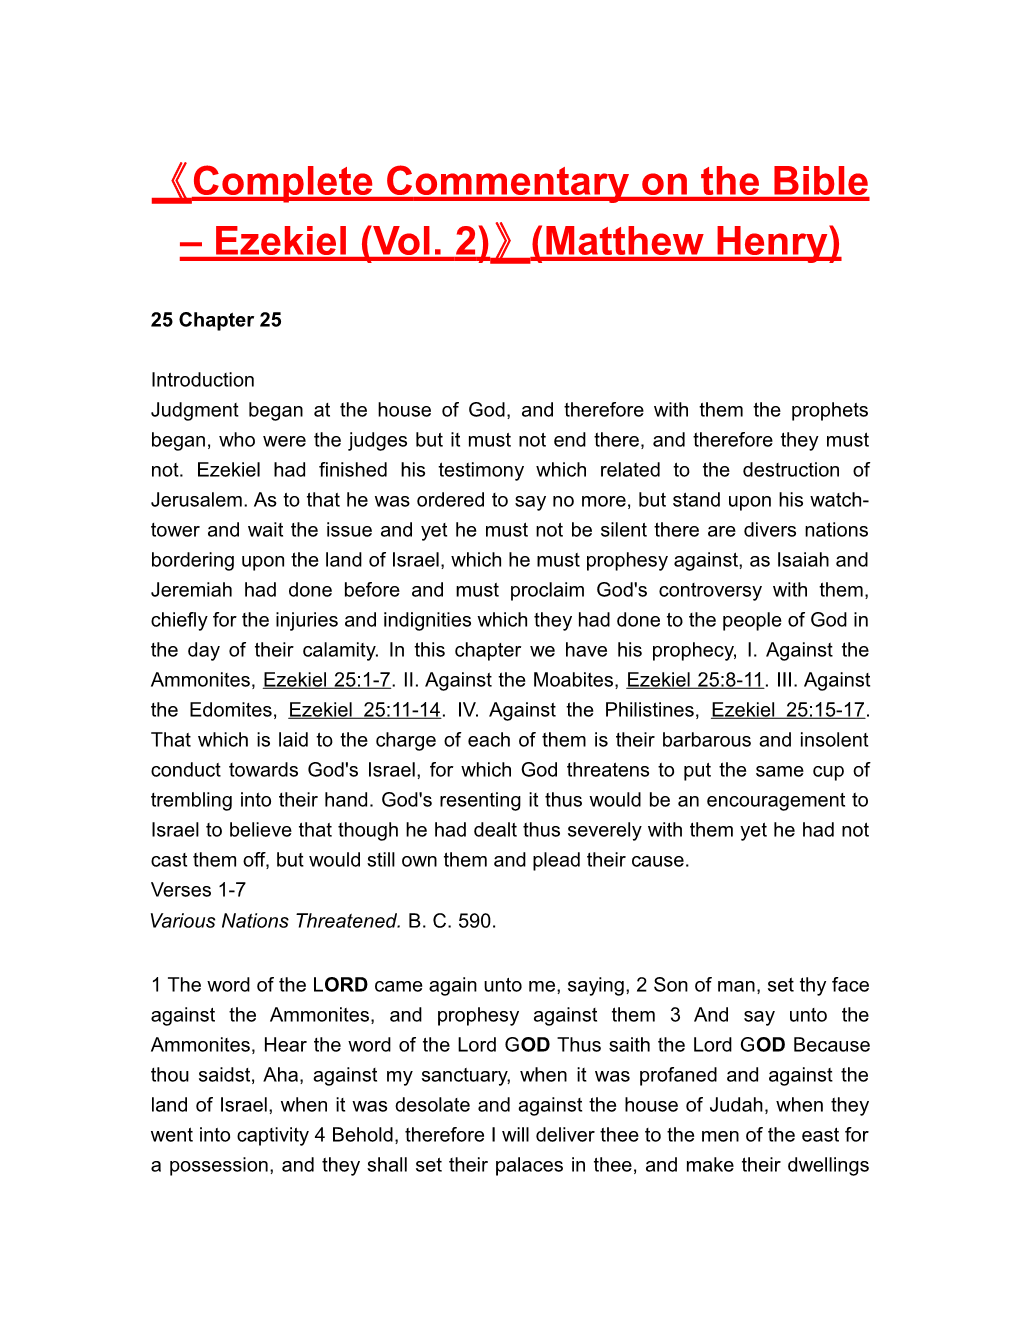 Complete Commentary on the Bible Ezekiel (Vol. 2) (Matthew Henry)